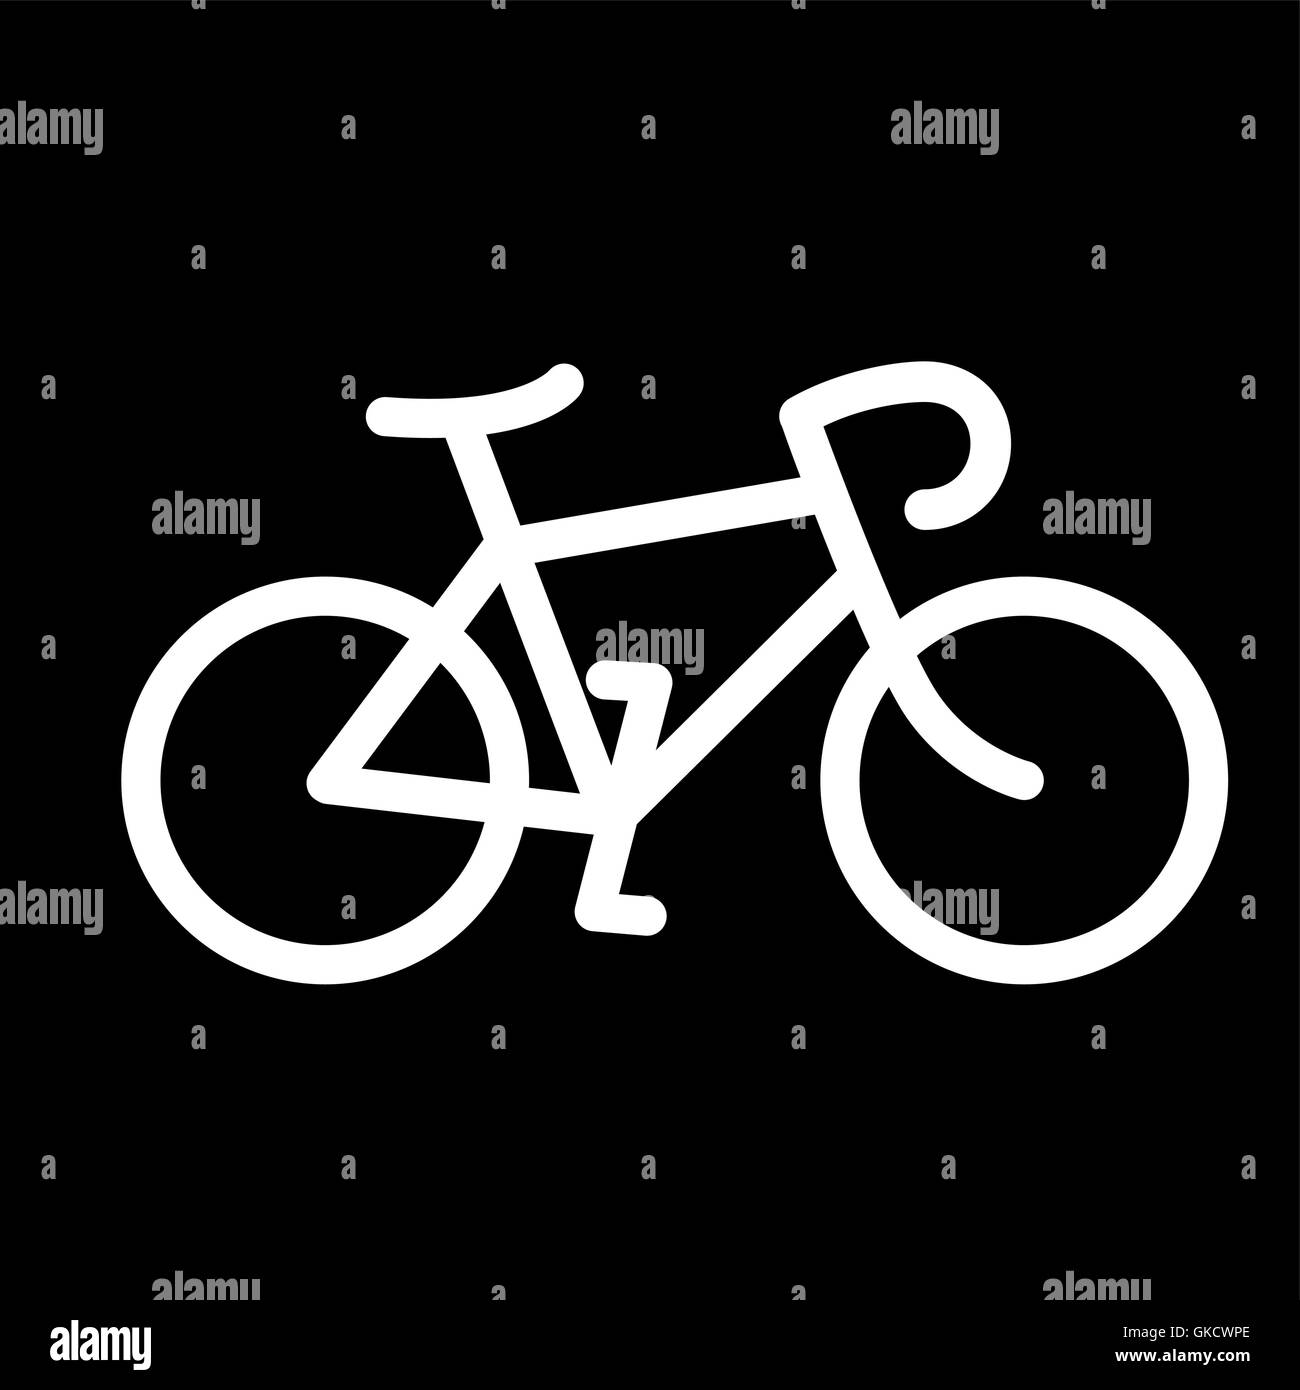 Minimalistic bicycle icon Stock Vector